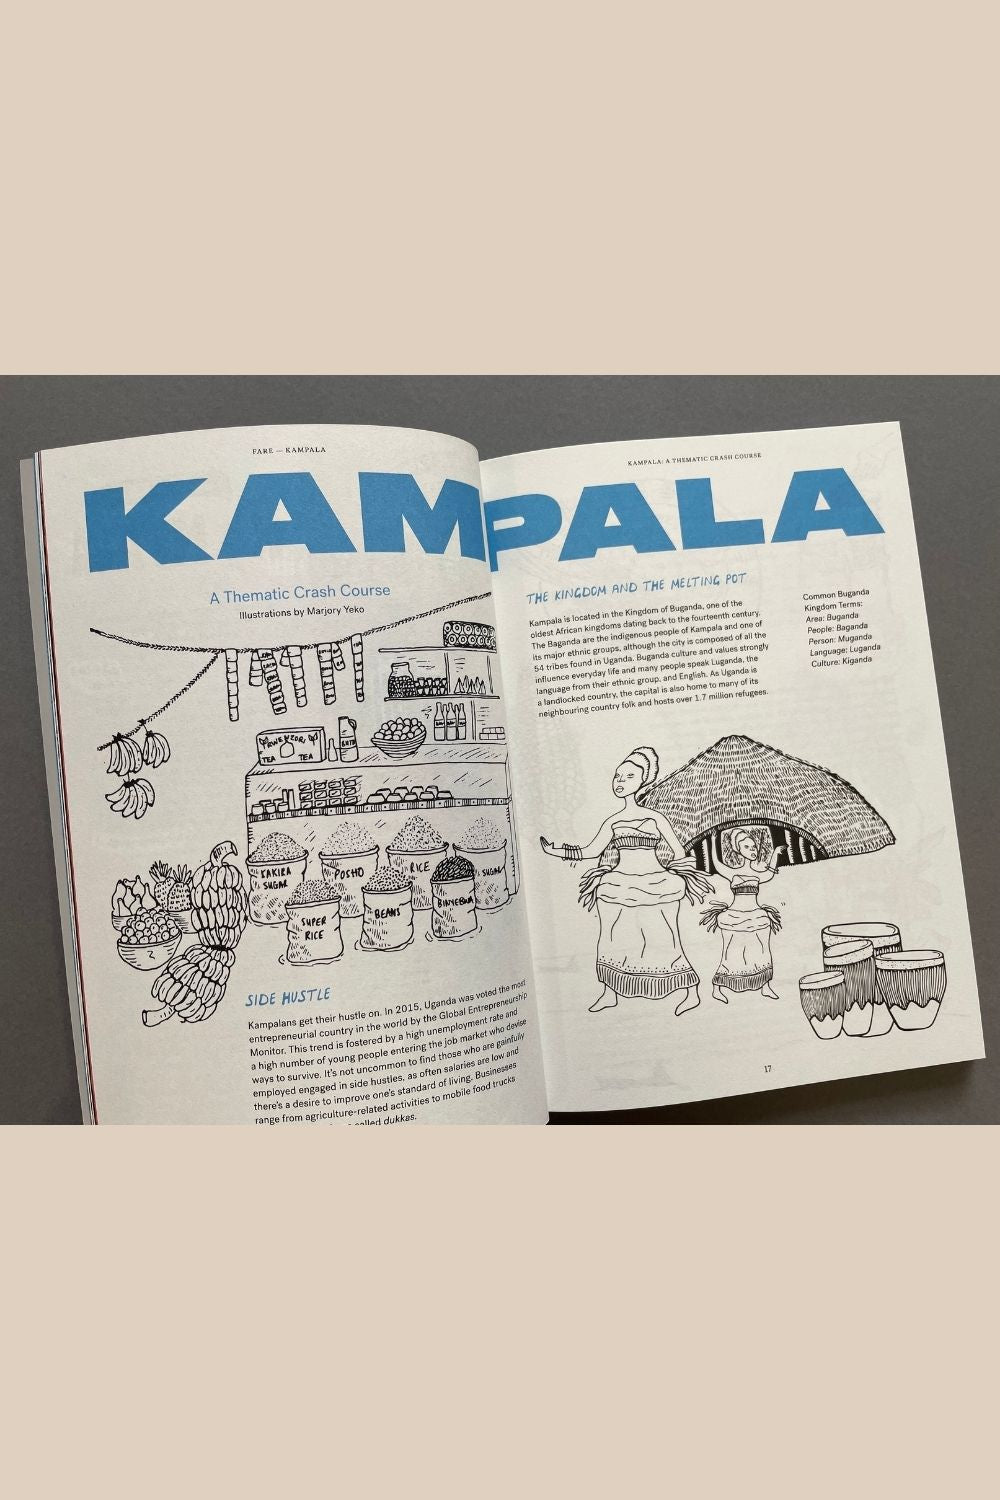 Fare Issue 09: Kampala